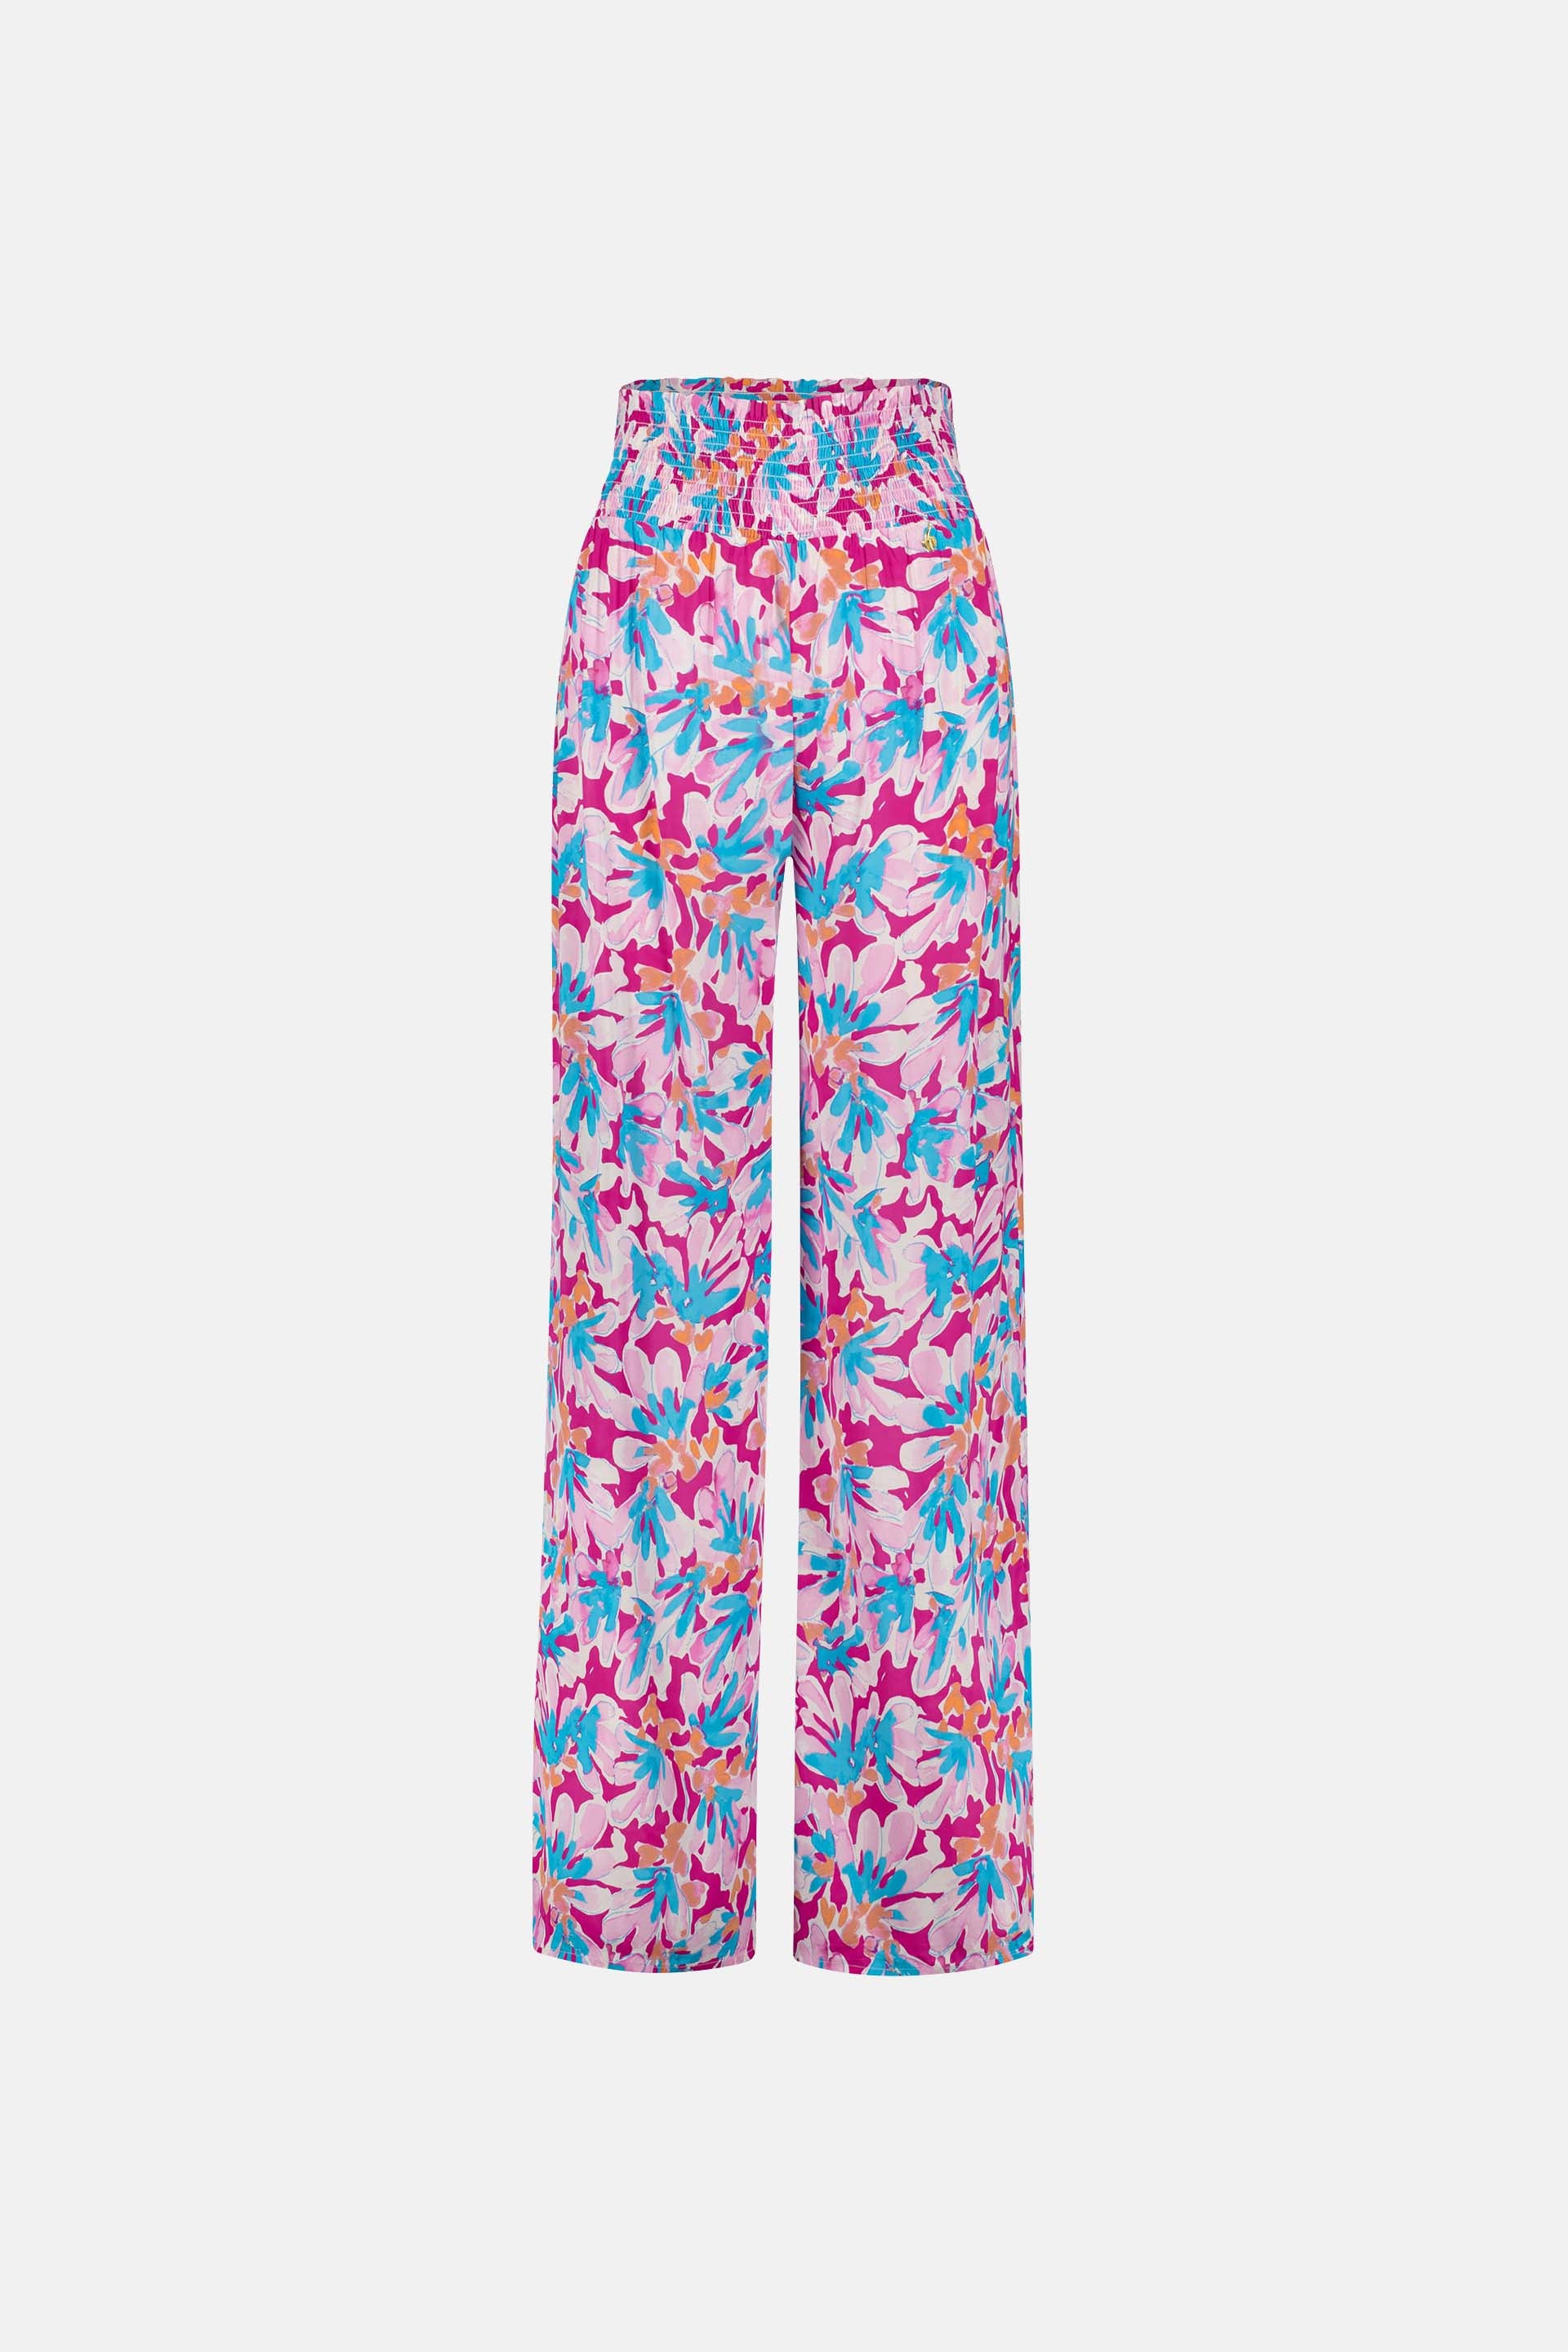 Palapa Trousers | Azure Blue/Hot Pink